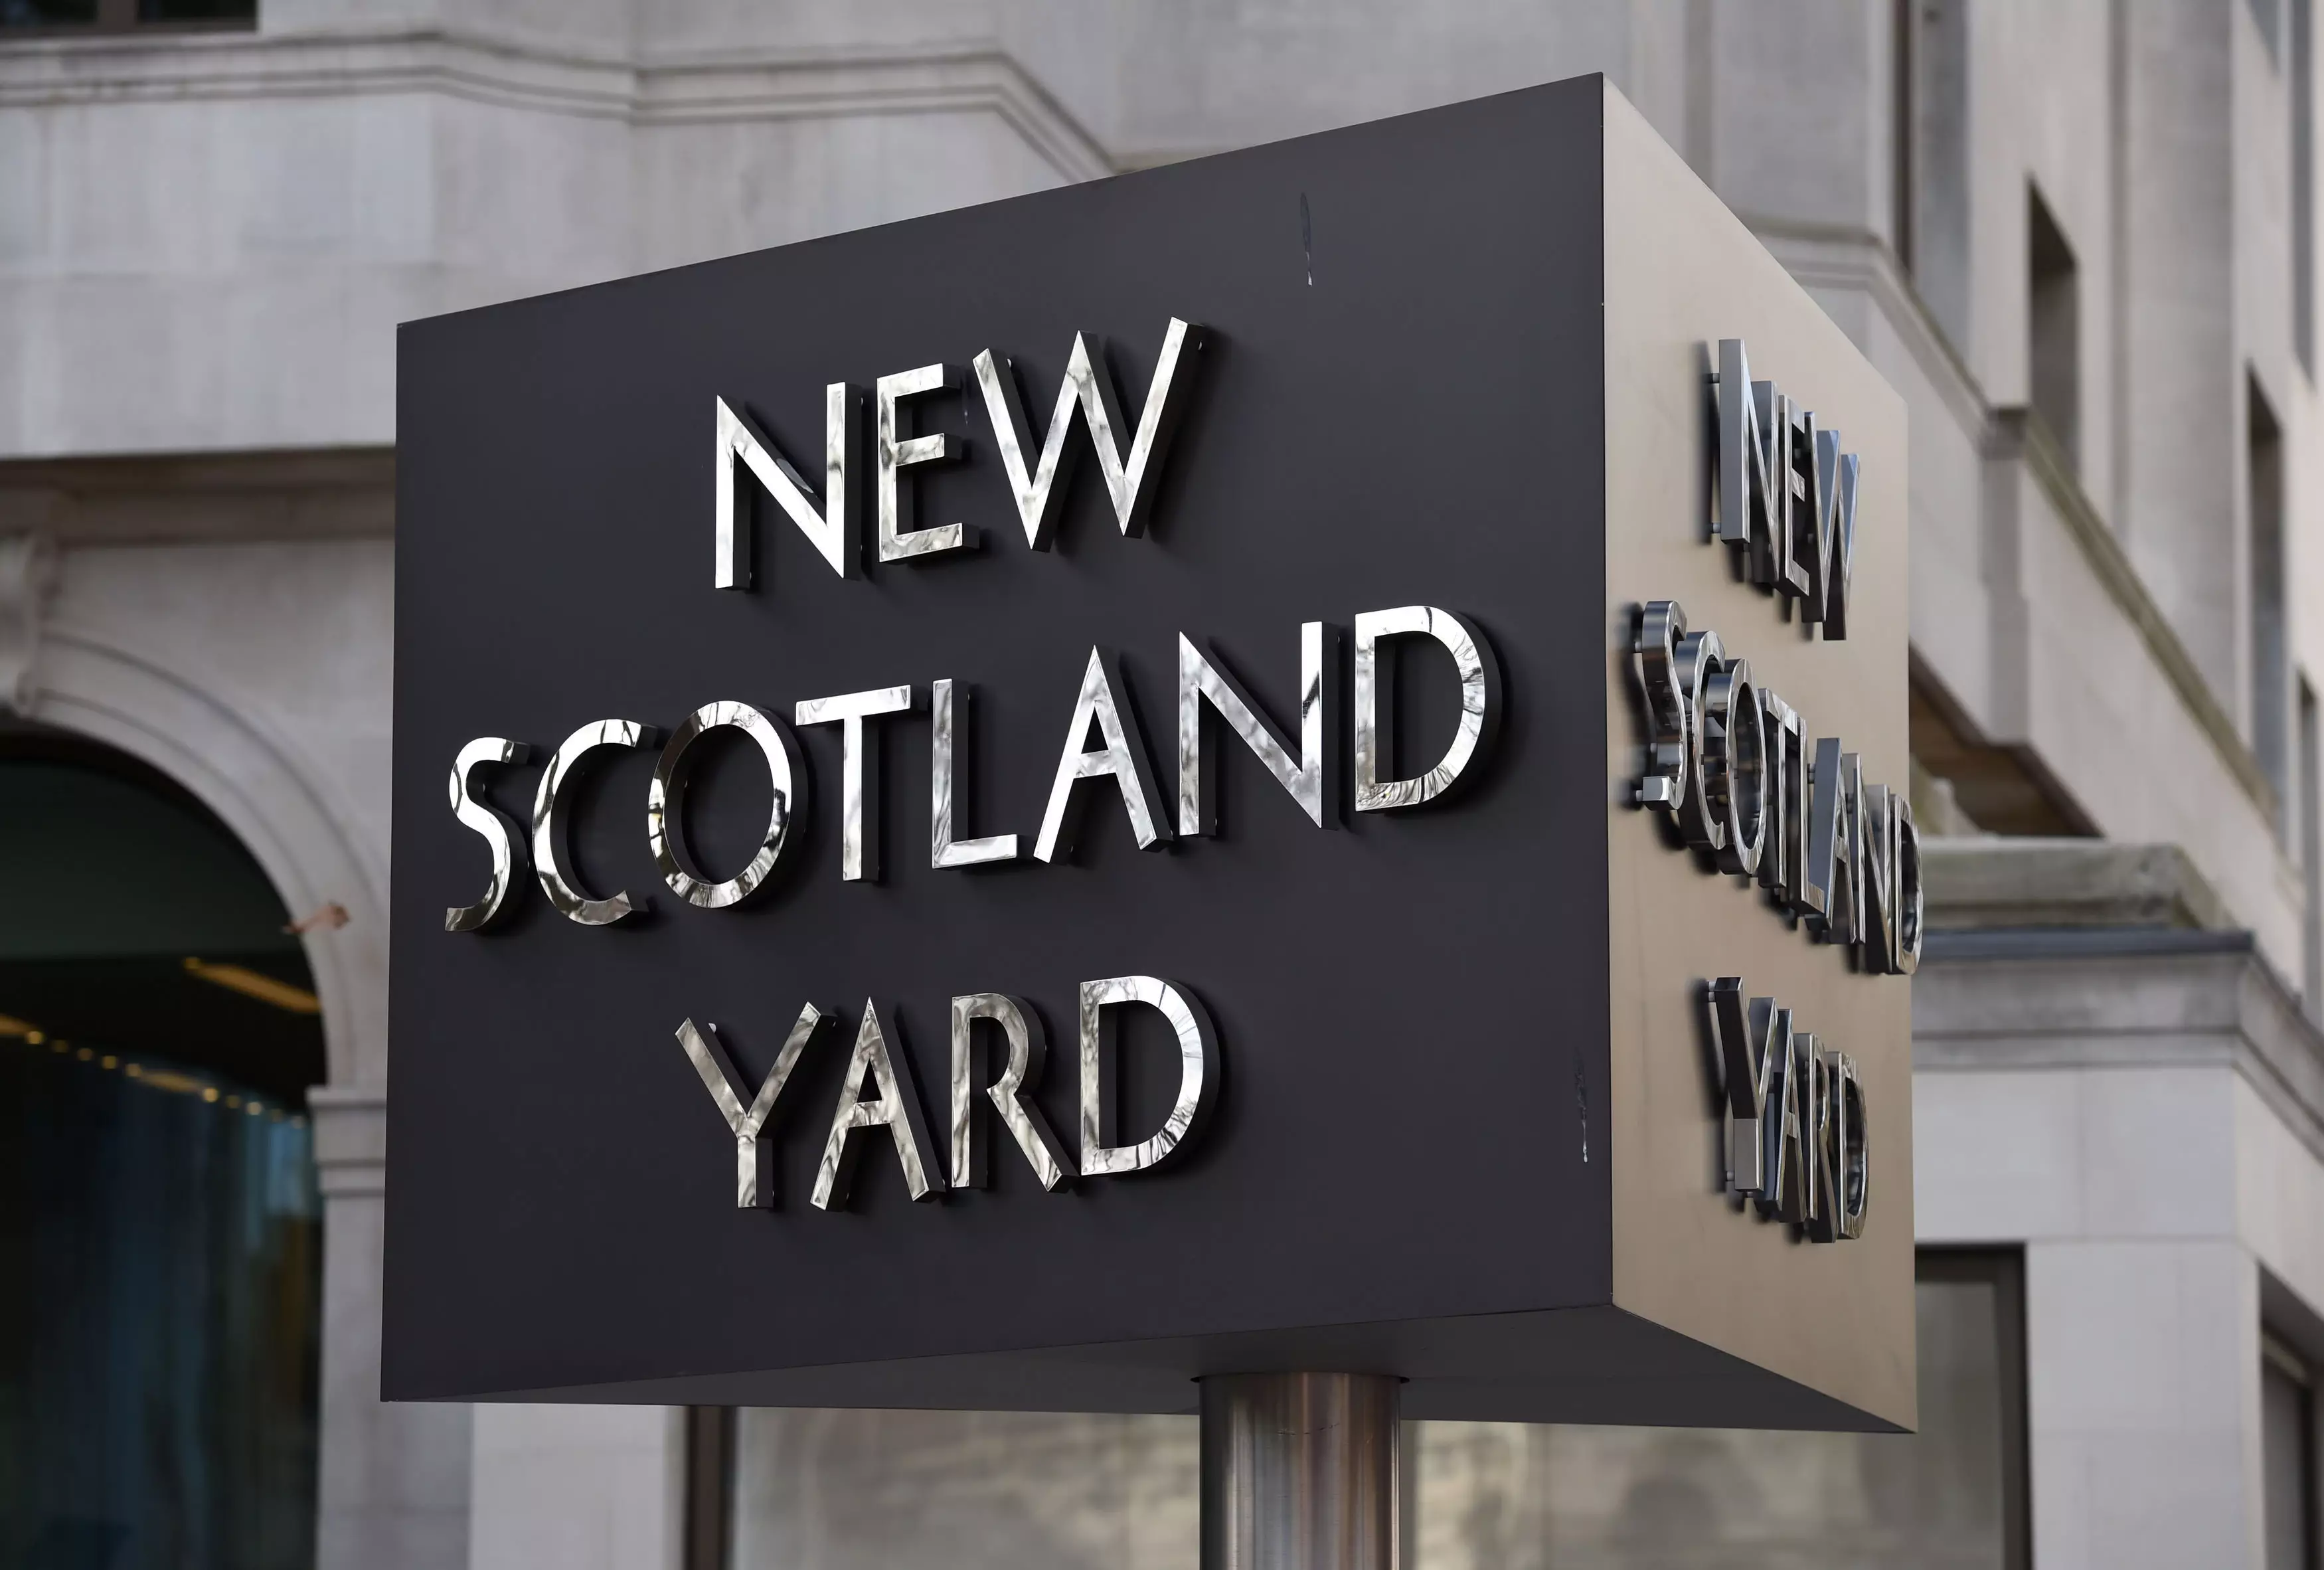 Met Police confirmed the £114m seizure is the UK's biggest.